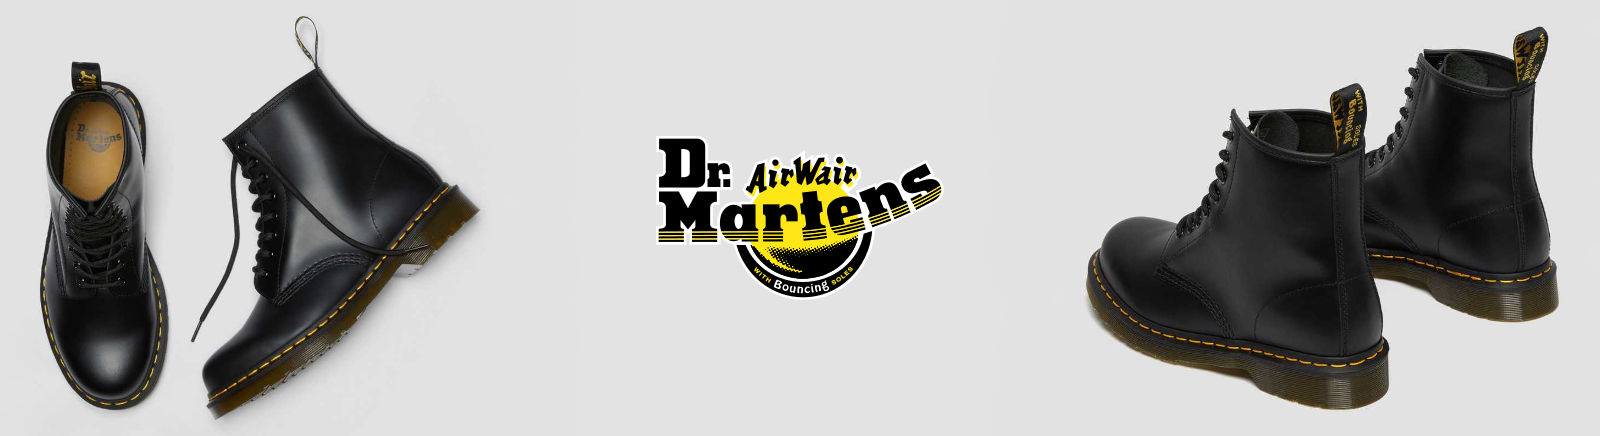 Juppen: Dr. Martens Boots für Herren online shoppen